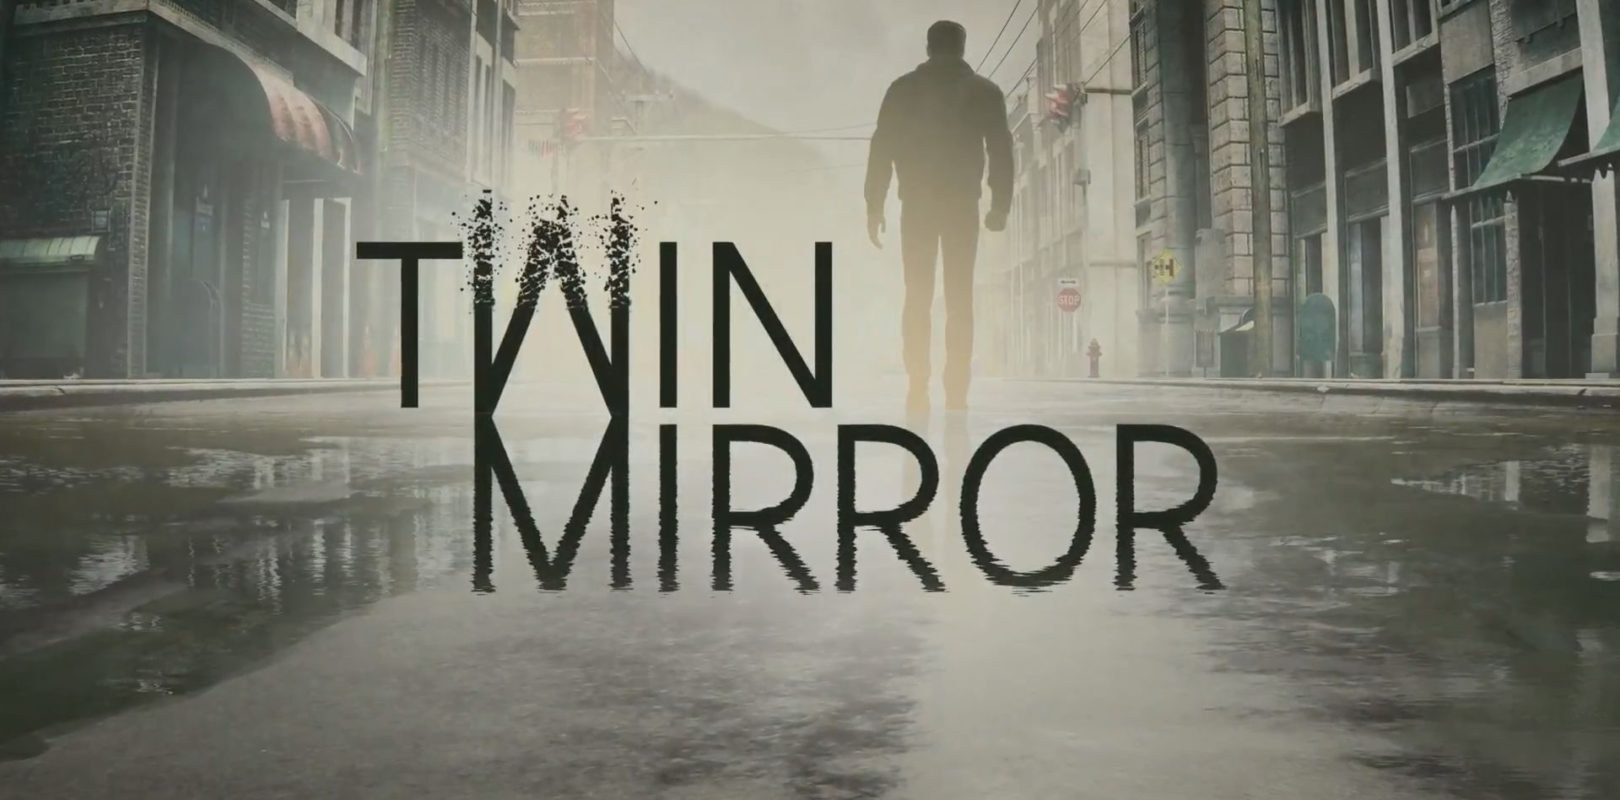 twin mirror news